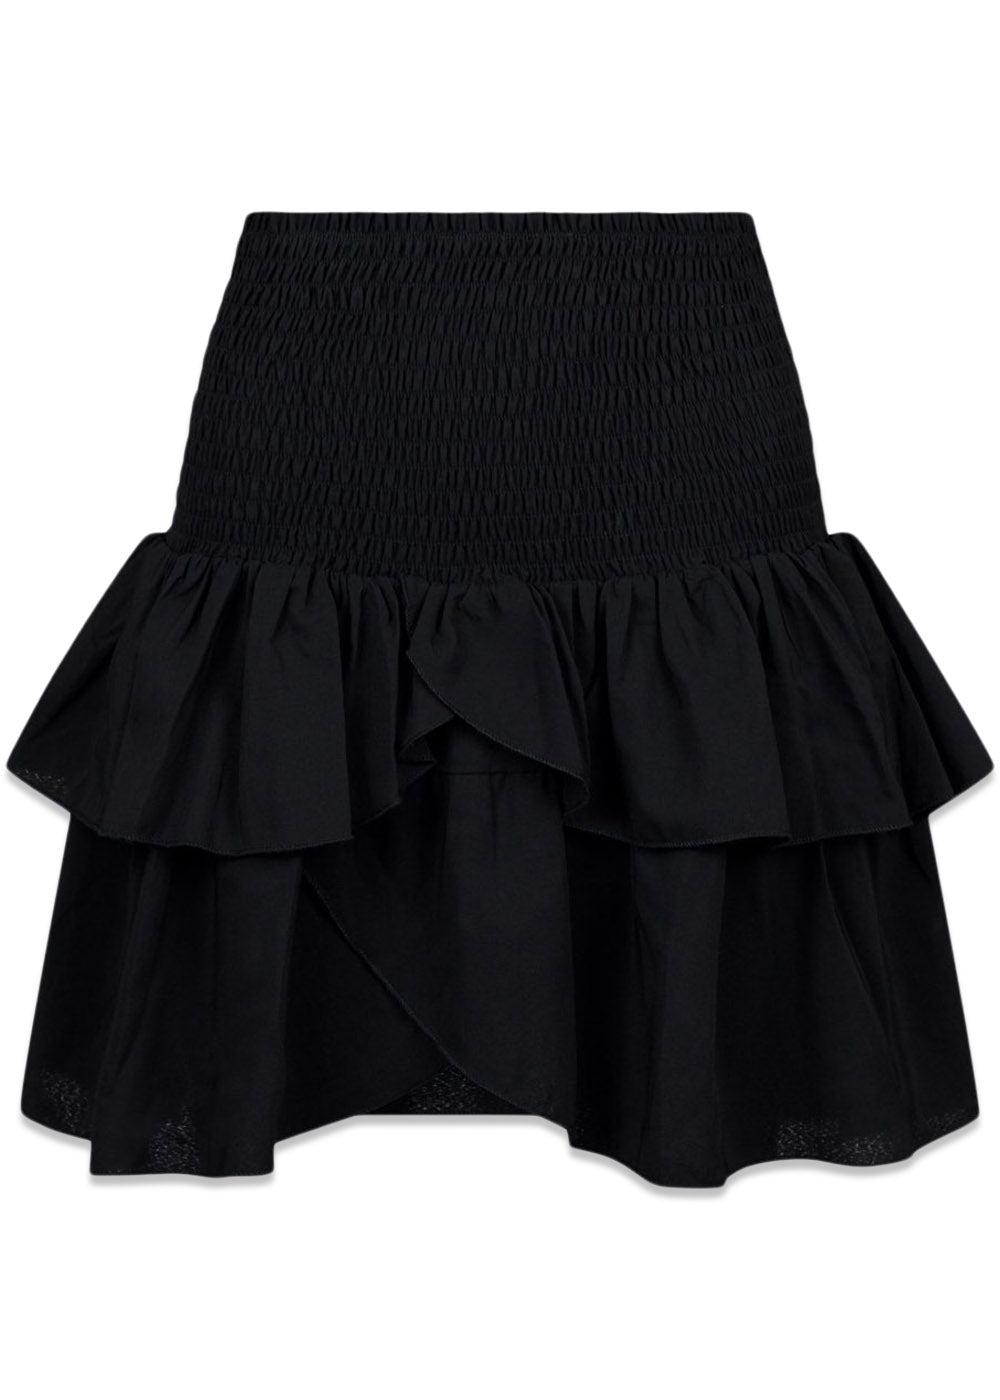 Neo Noirs Carin R Skirt - Black. Køb skirts her.